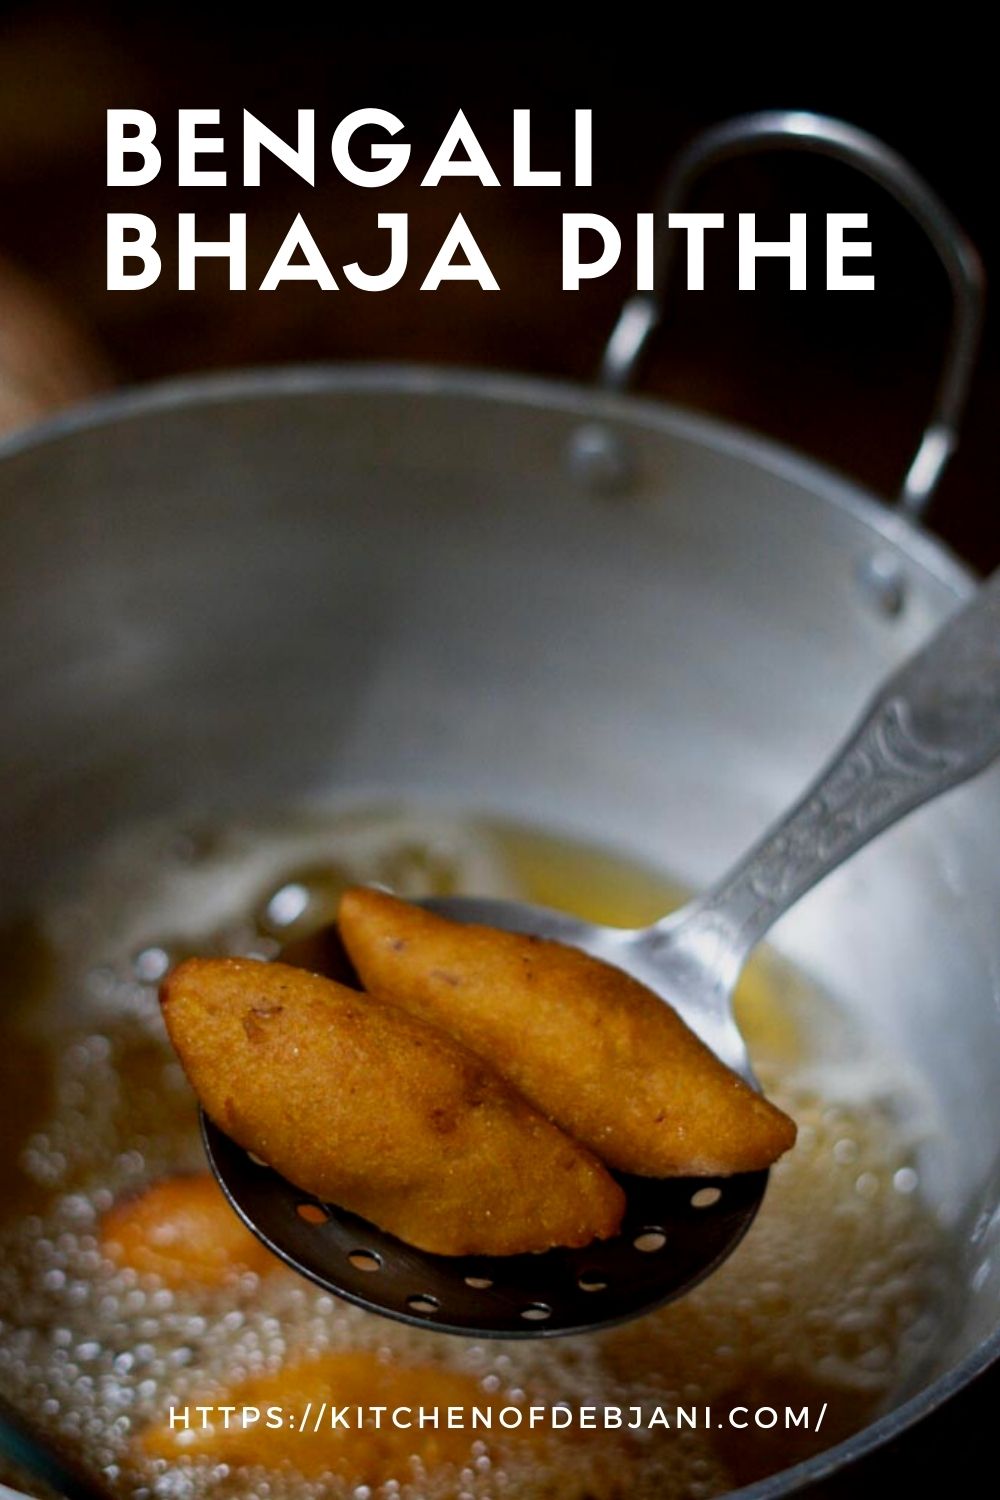 %Bengali Bhaja Pithe Photo Food Pinterest Pin